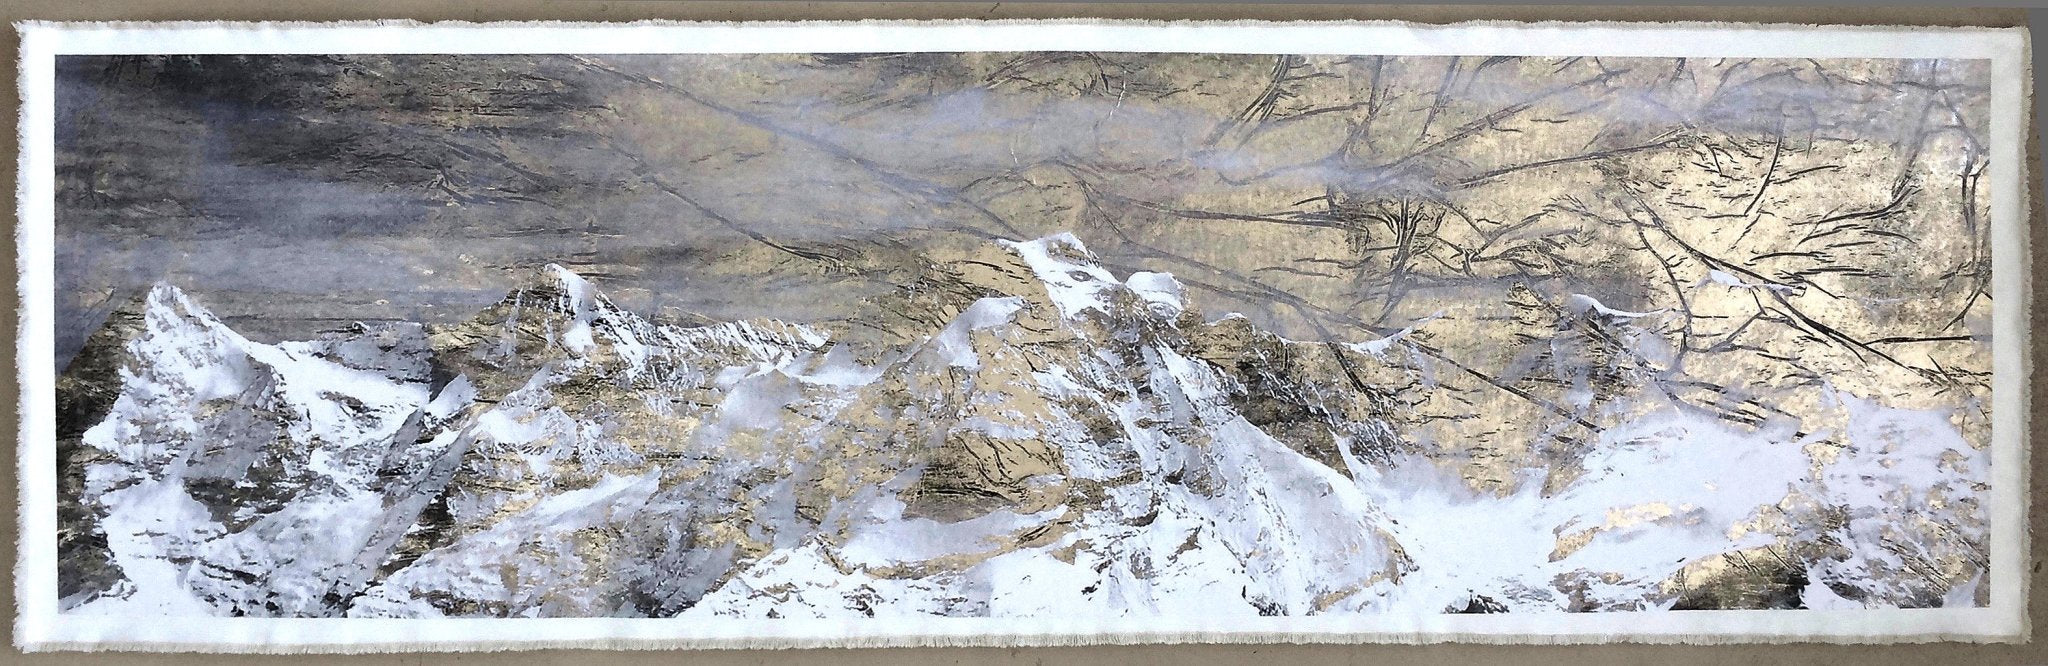 Jungfrau I, Switzerland - Petra Gut Contemporary AG- Bill Claps